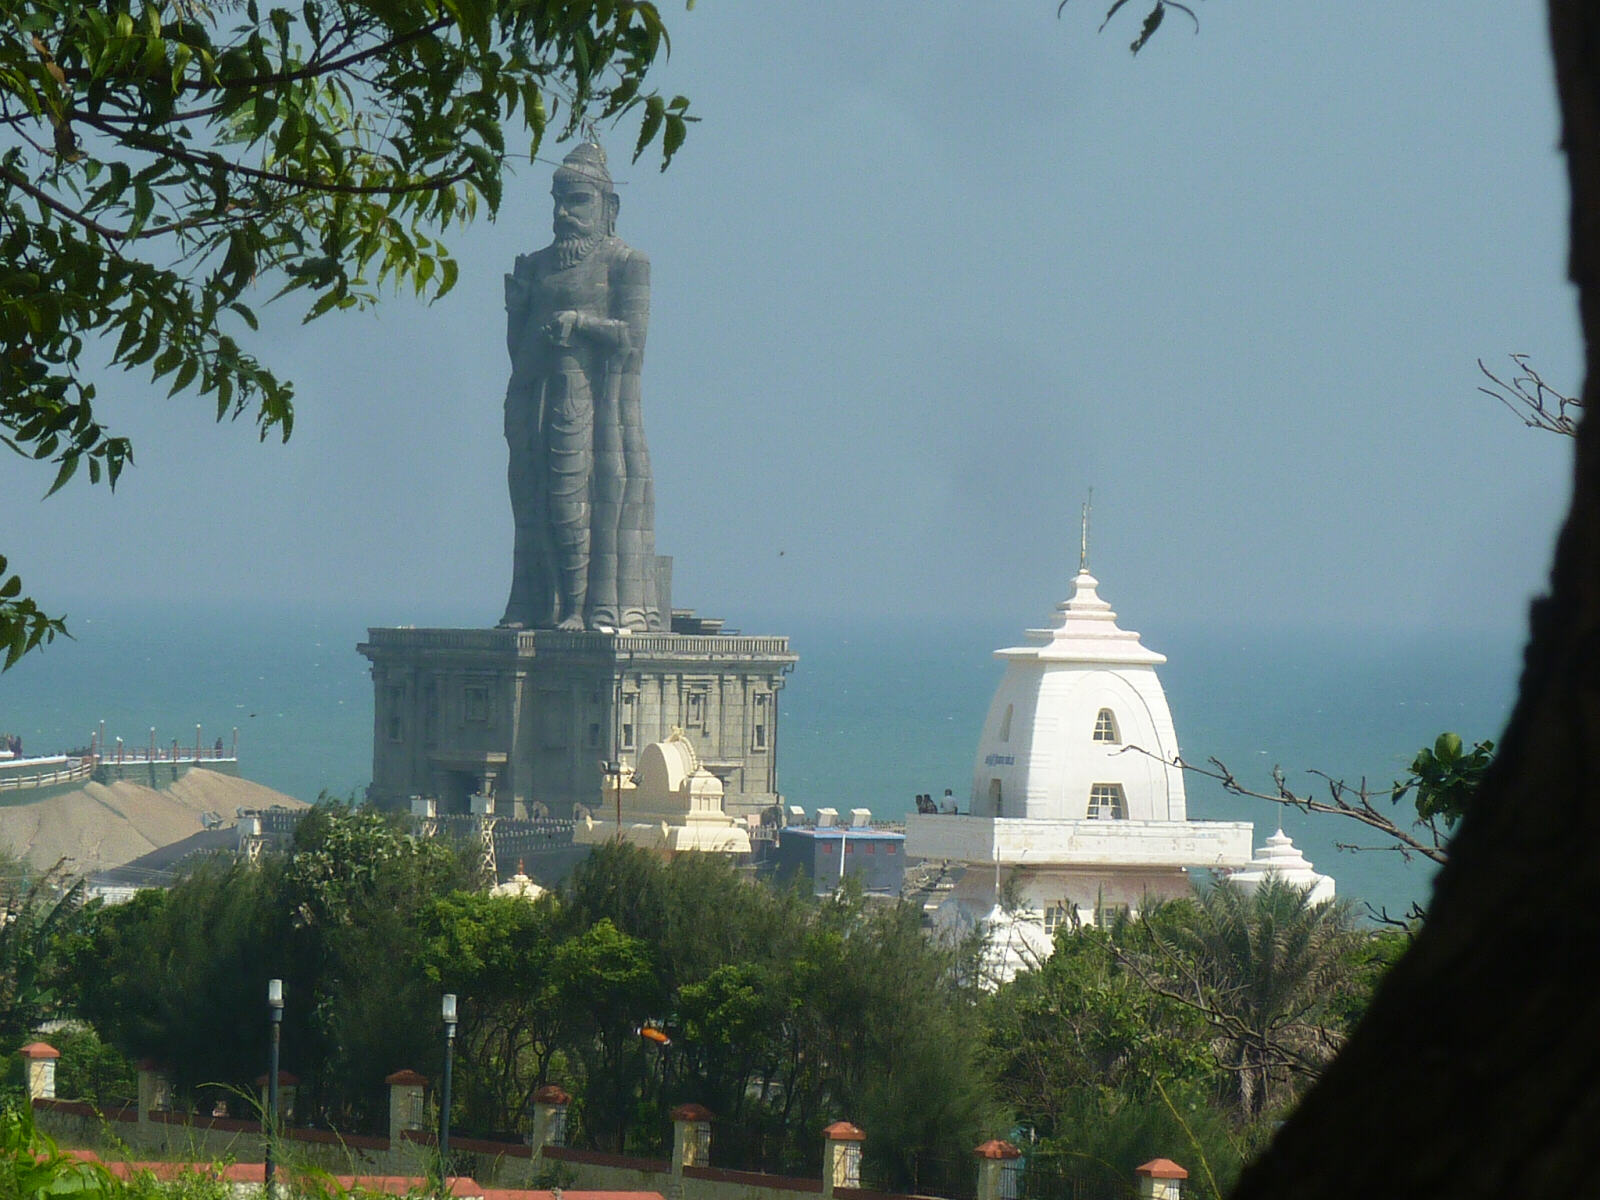 The statue in Kanyakumari at the tip of India